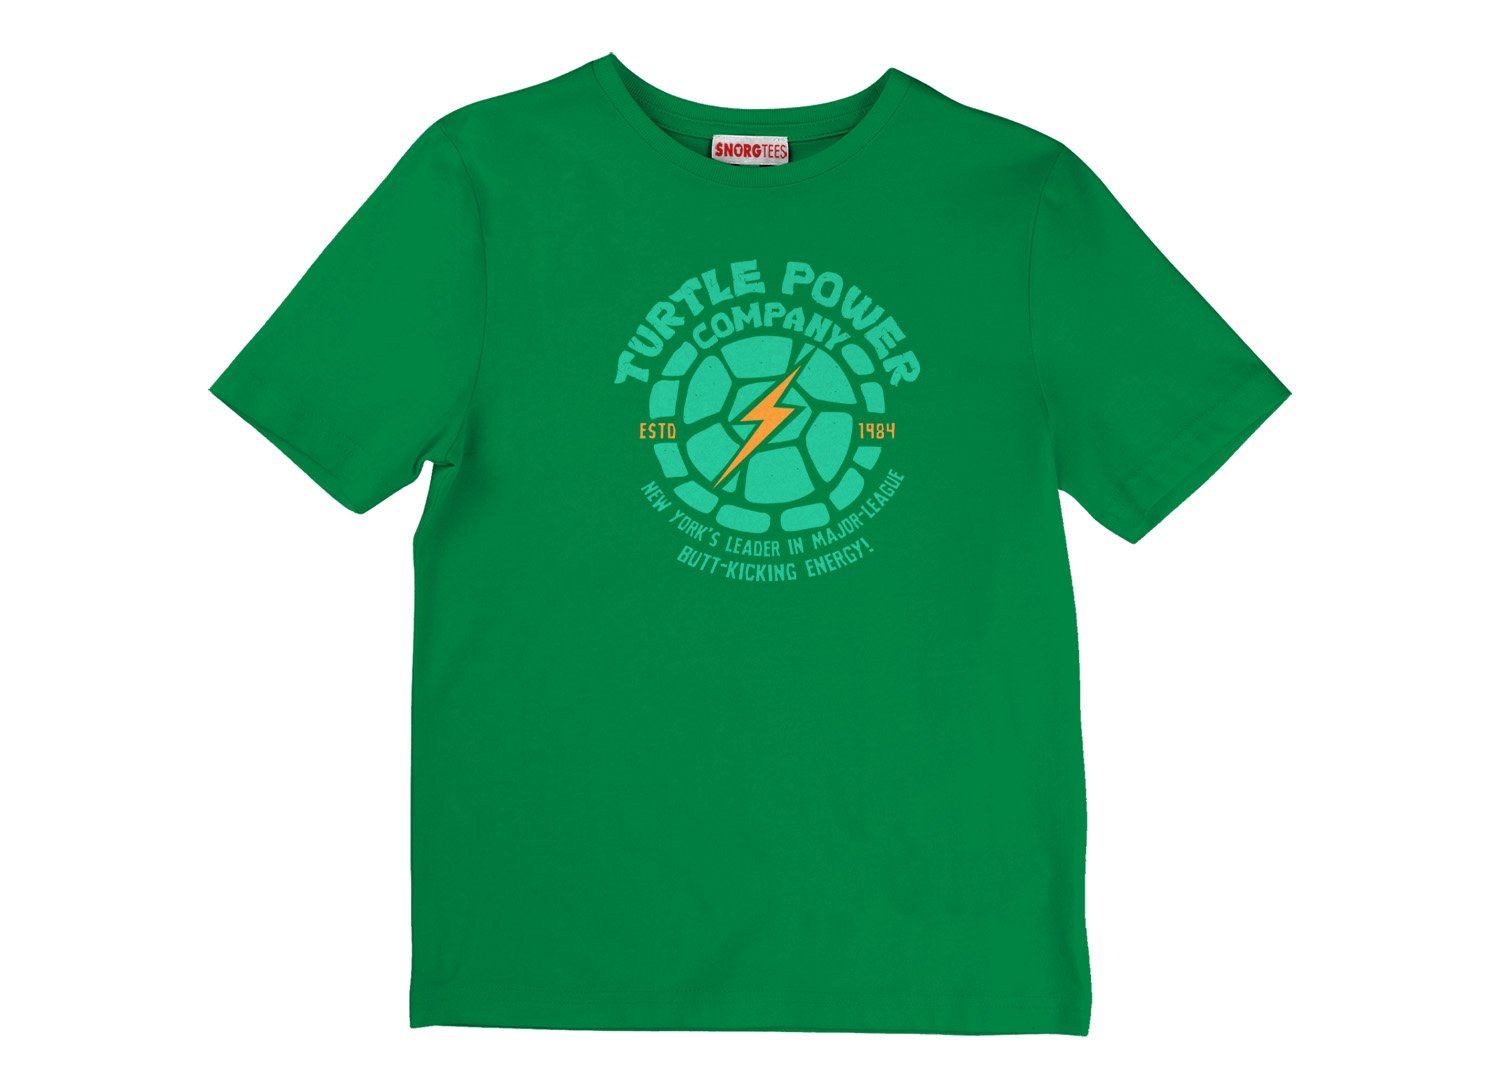 Ninja Turtles Turtle Power Company T Shirt Image2